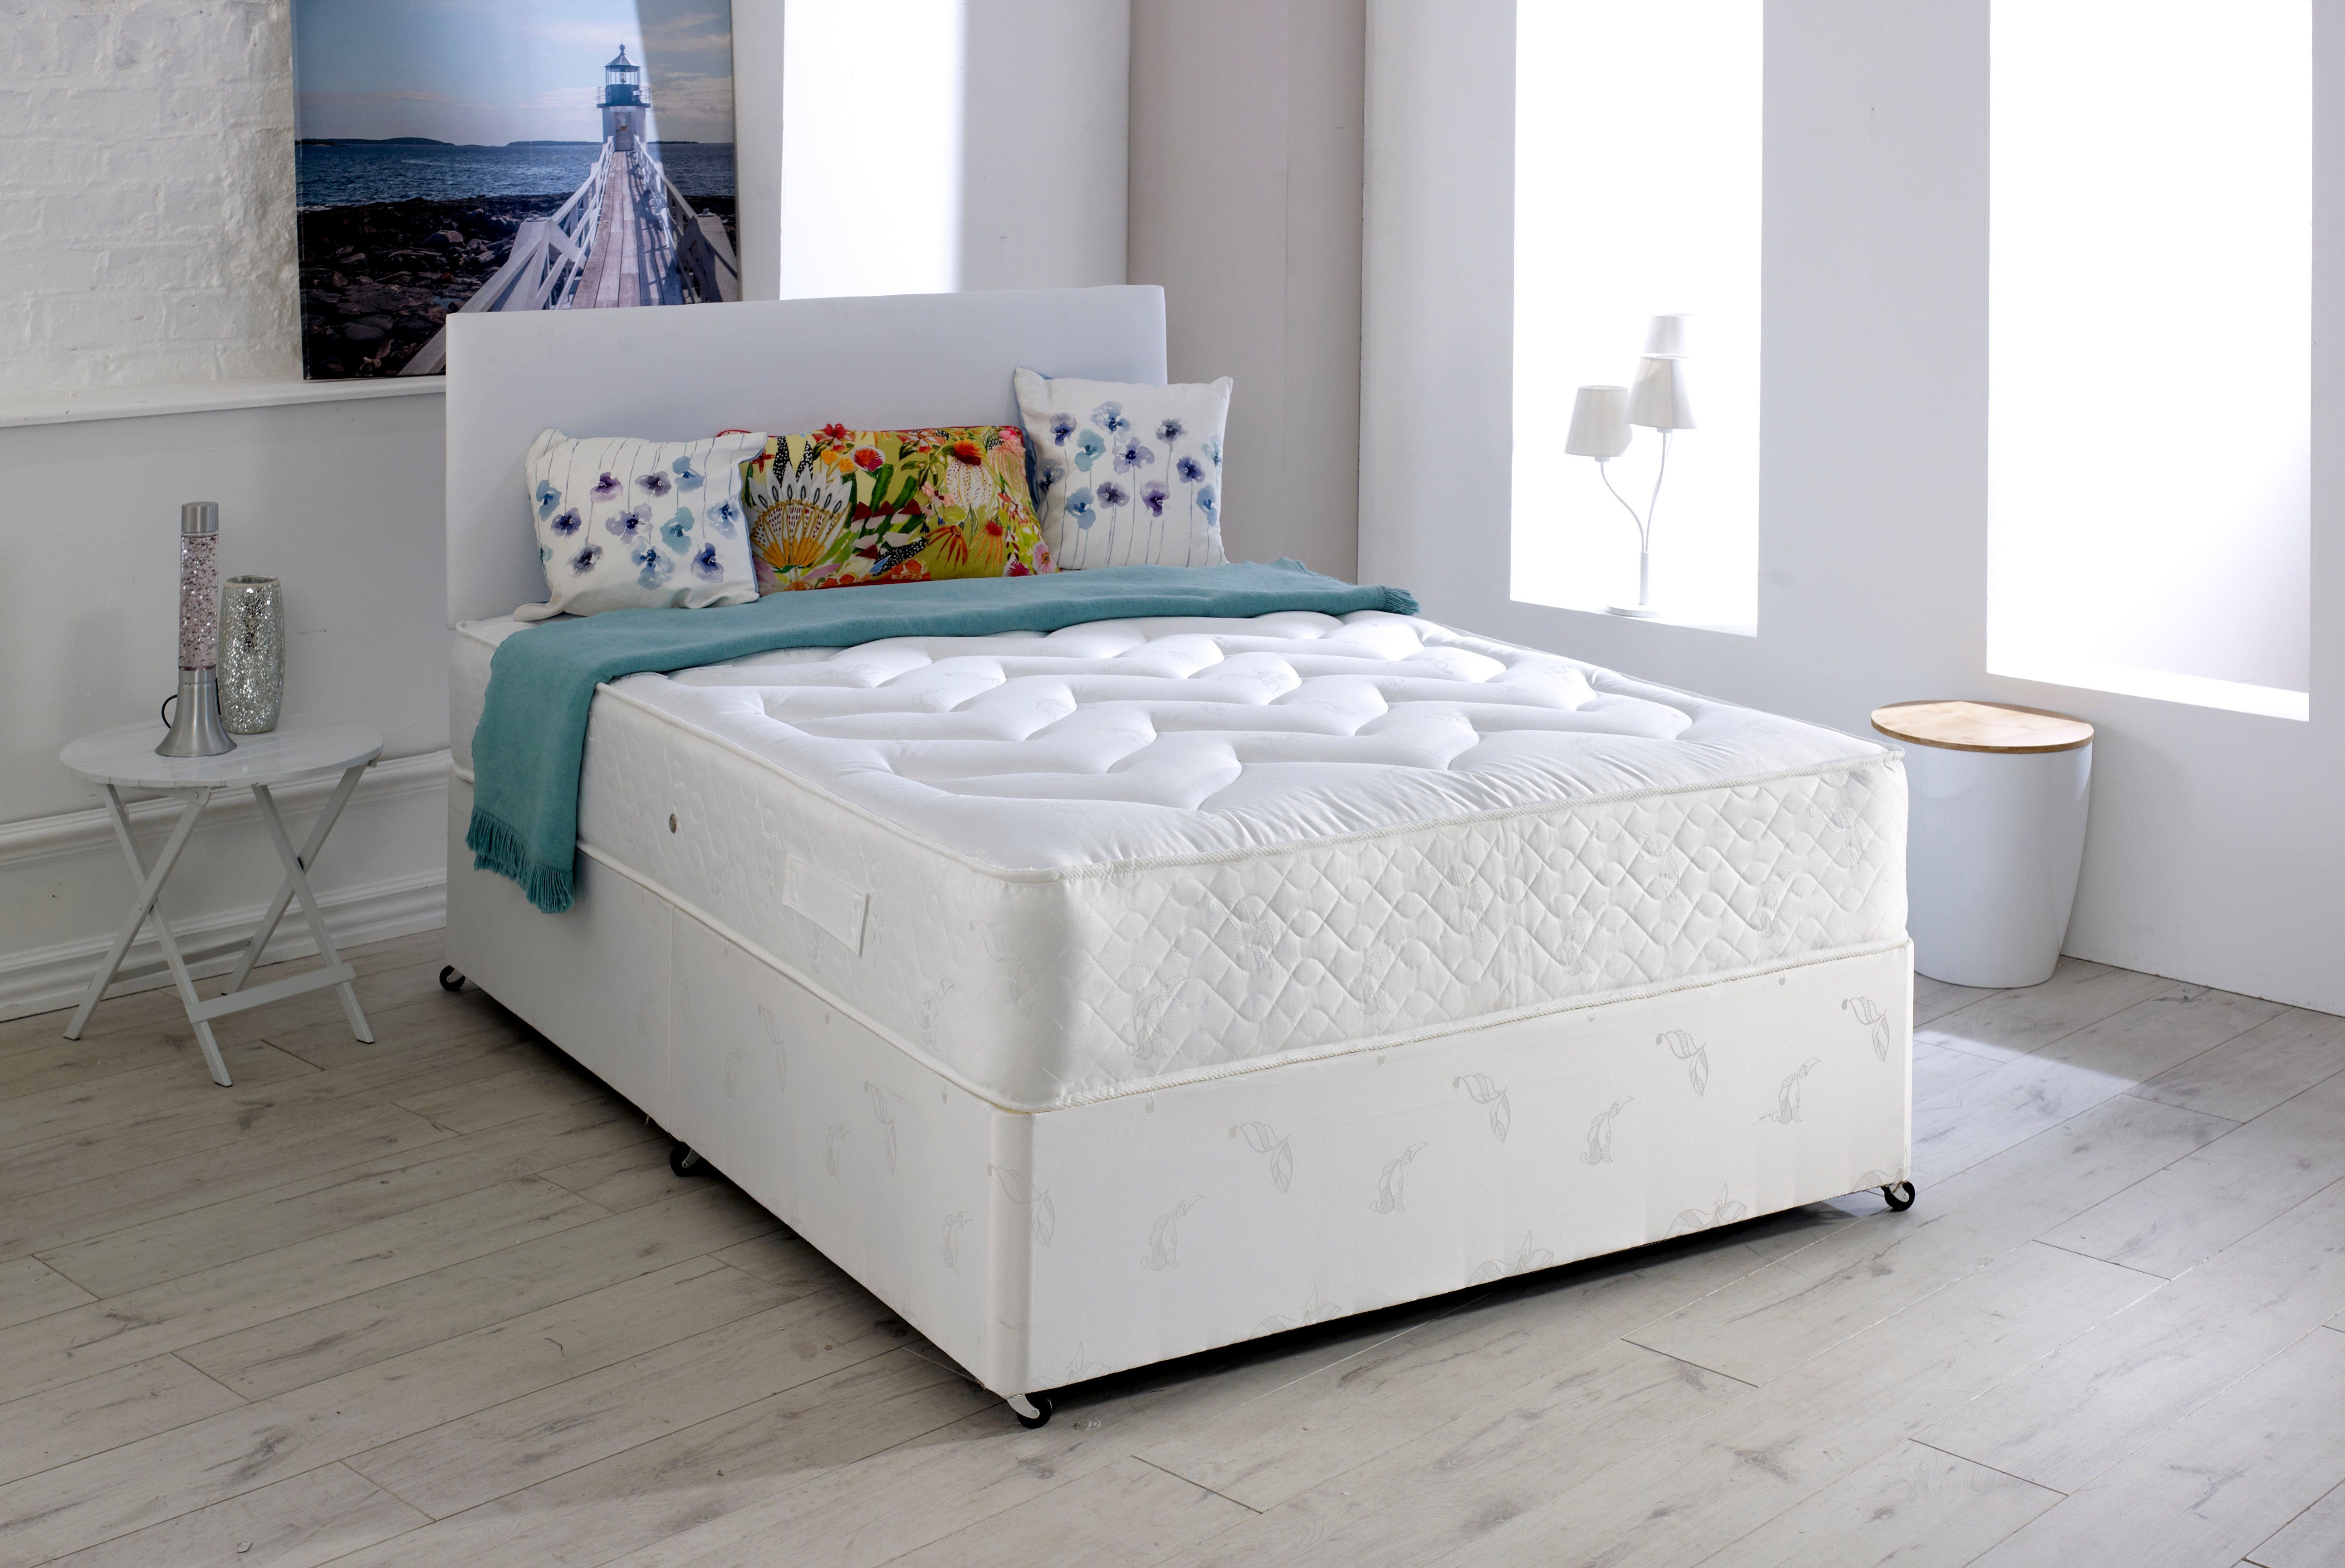 Windsor Divan Bed Set With Orthopaedic Medium Firm Mattress And Headboard